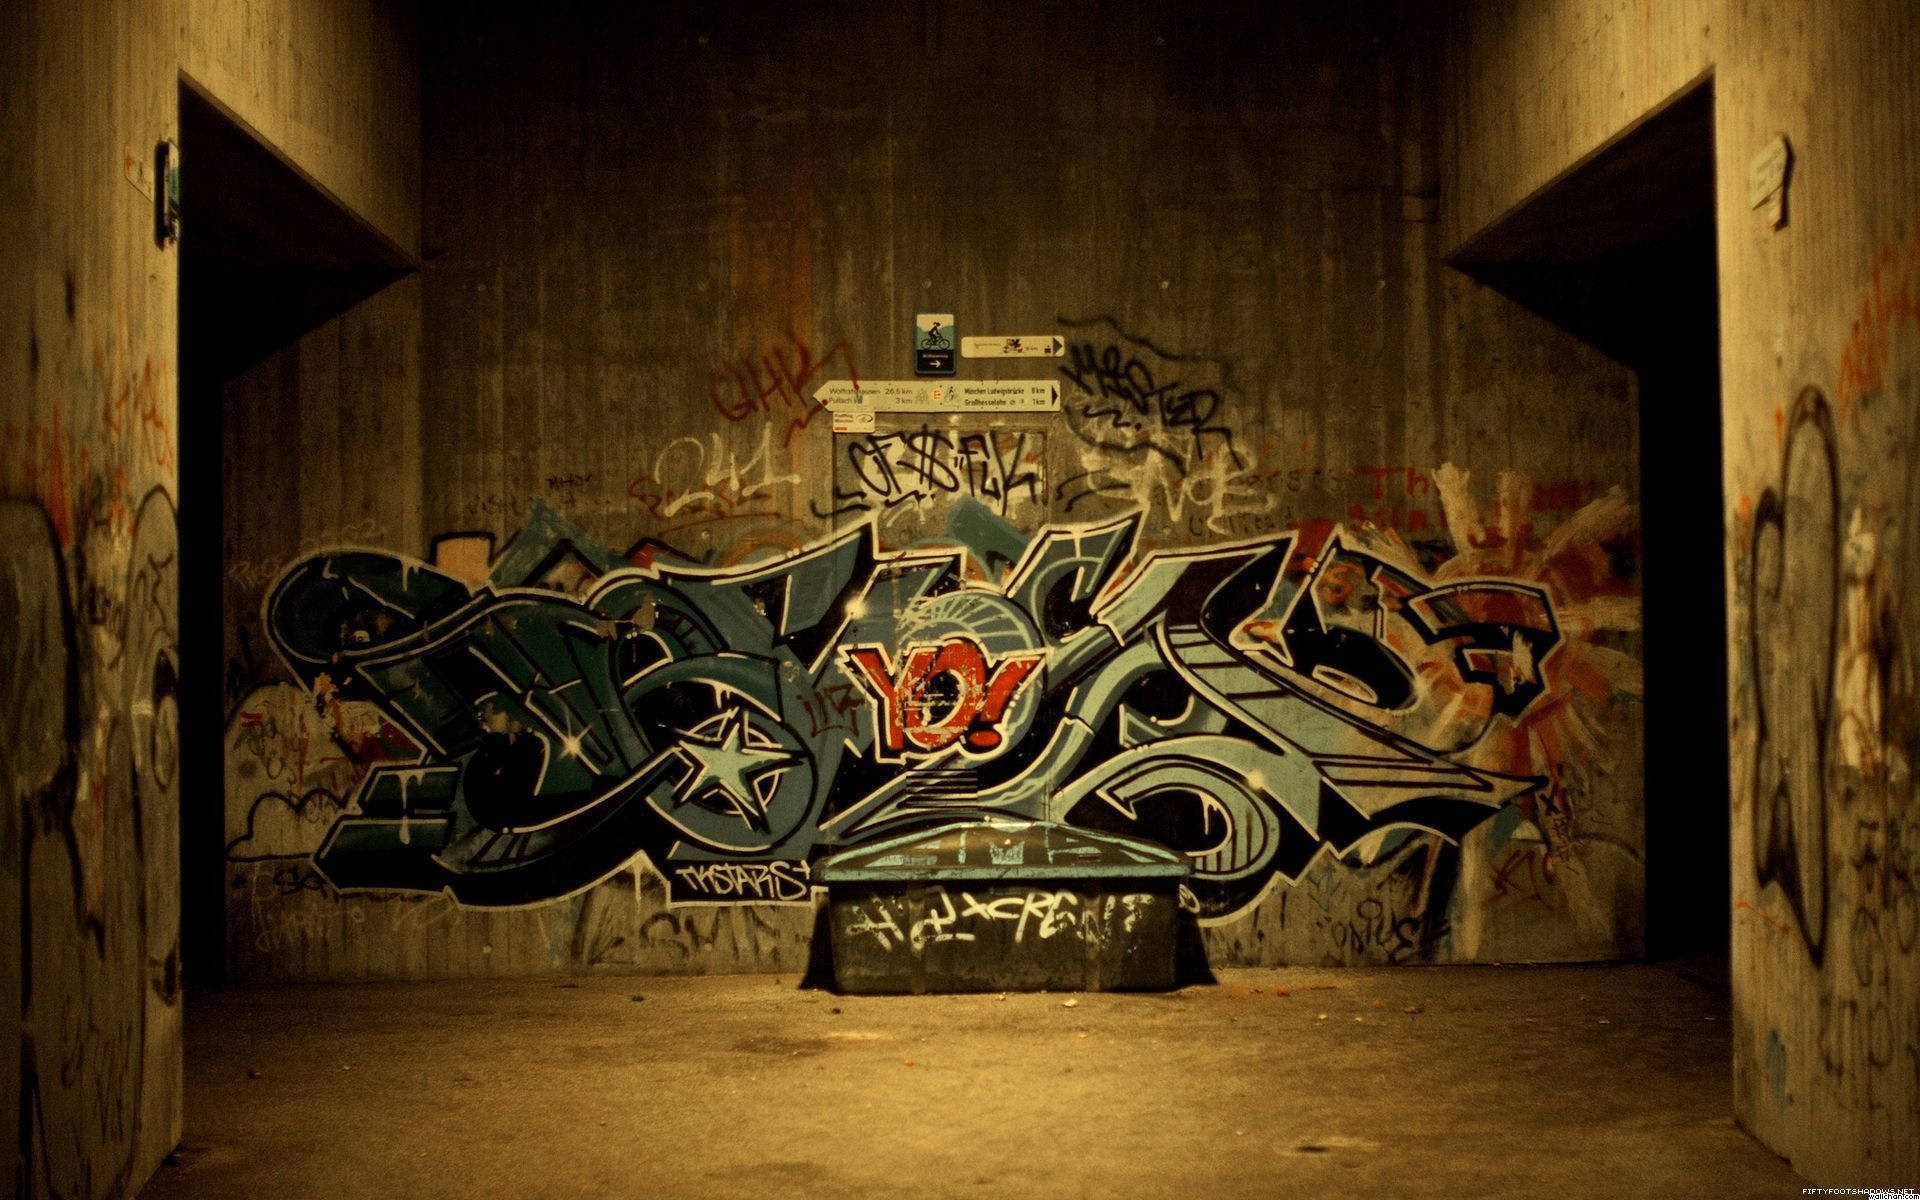 Graffiti Wallpapers, HD Graffiti Backgrounds, Free Images Download